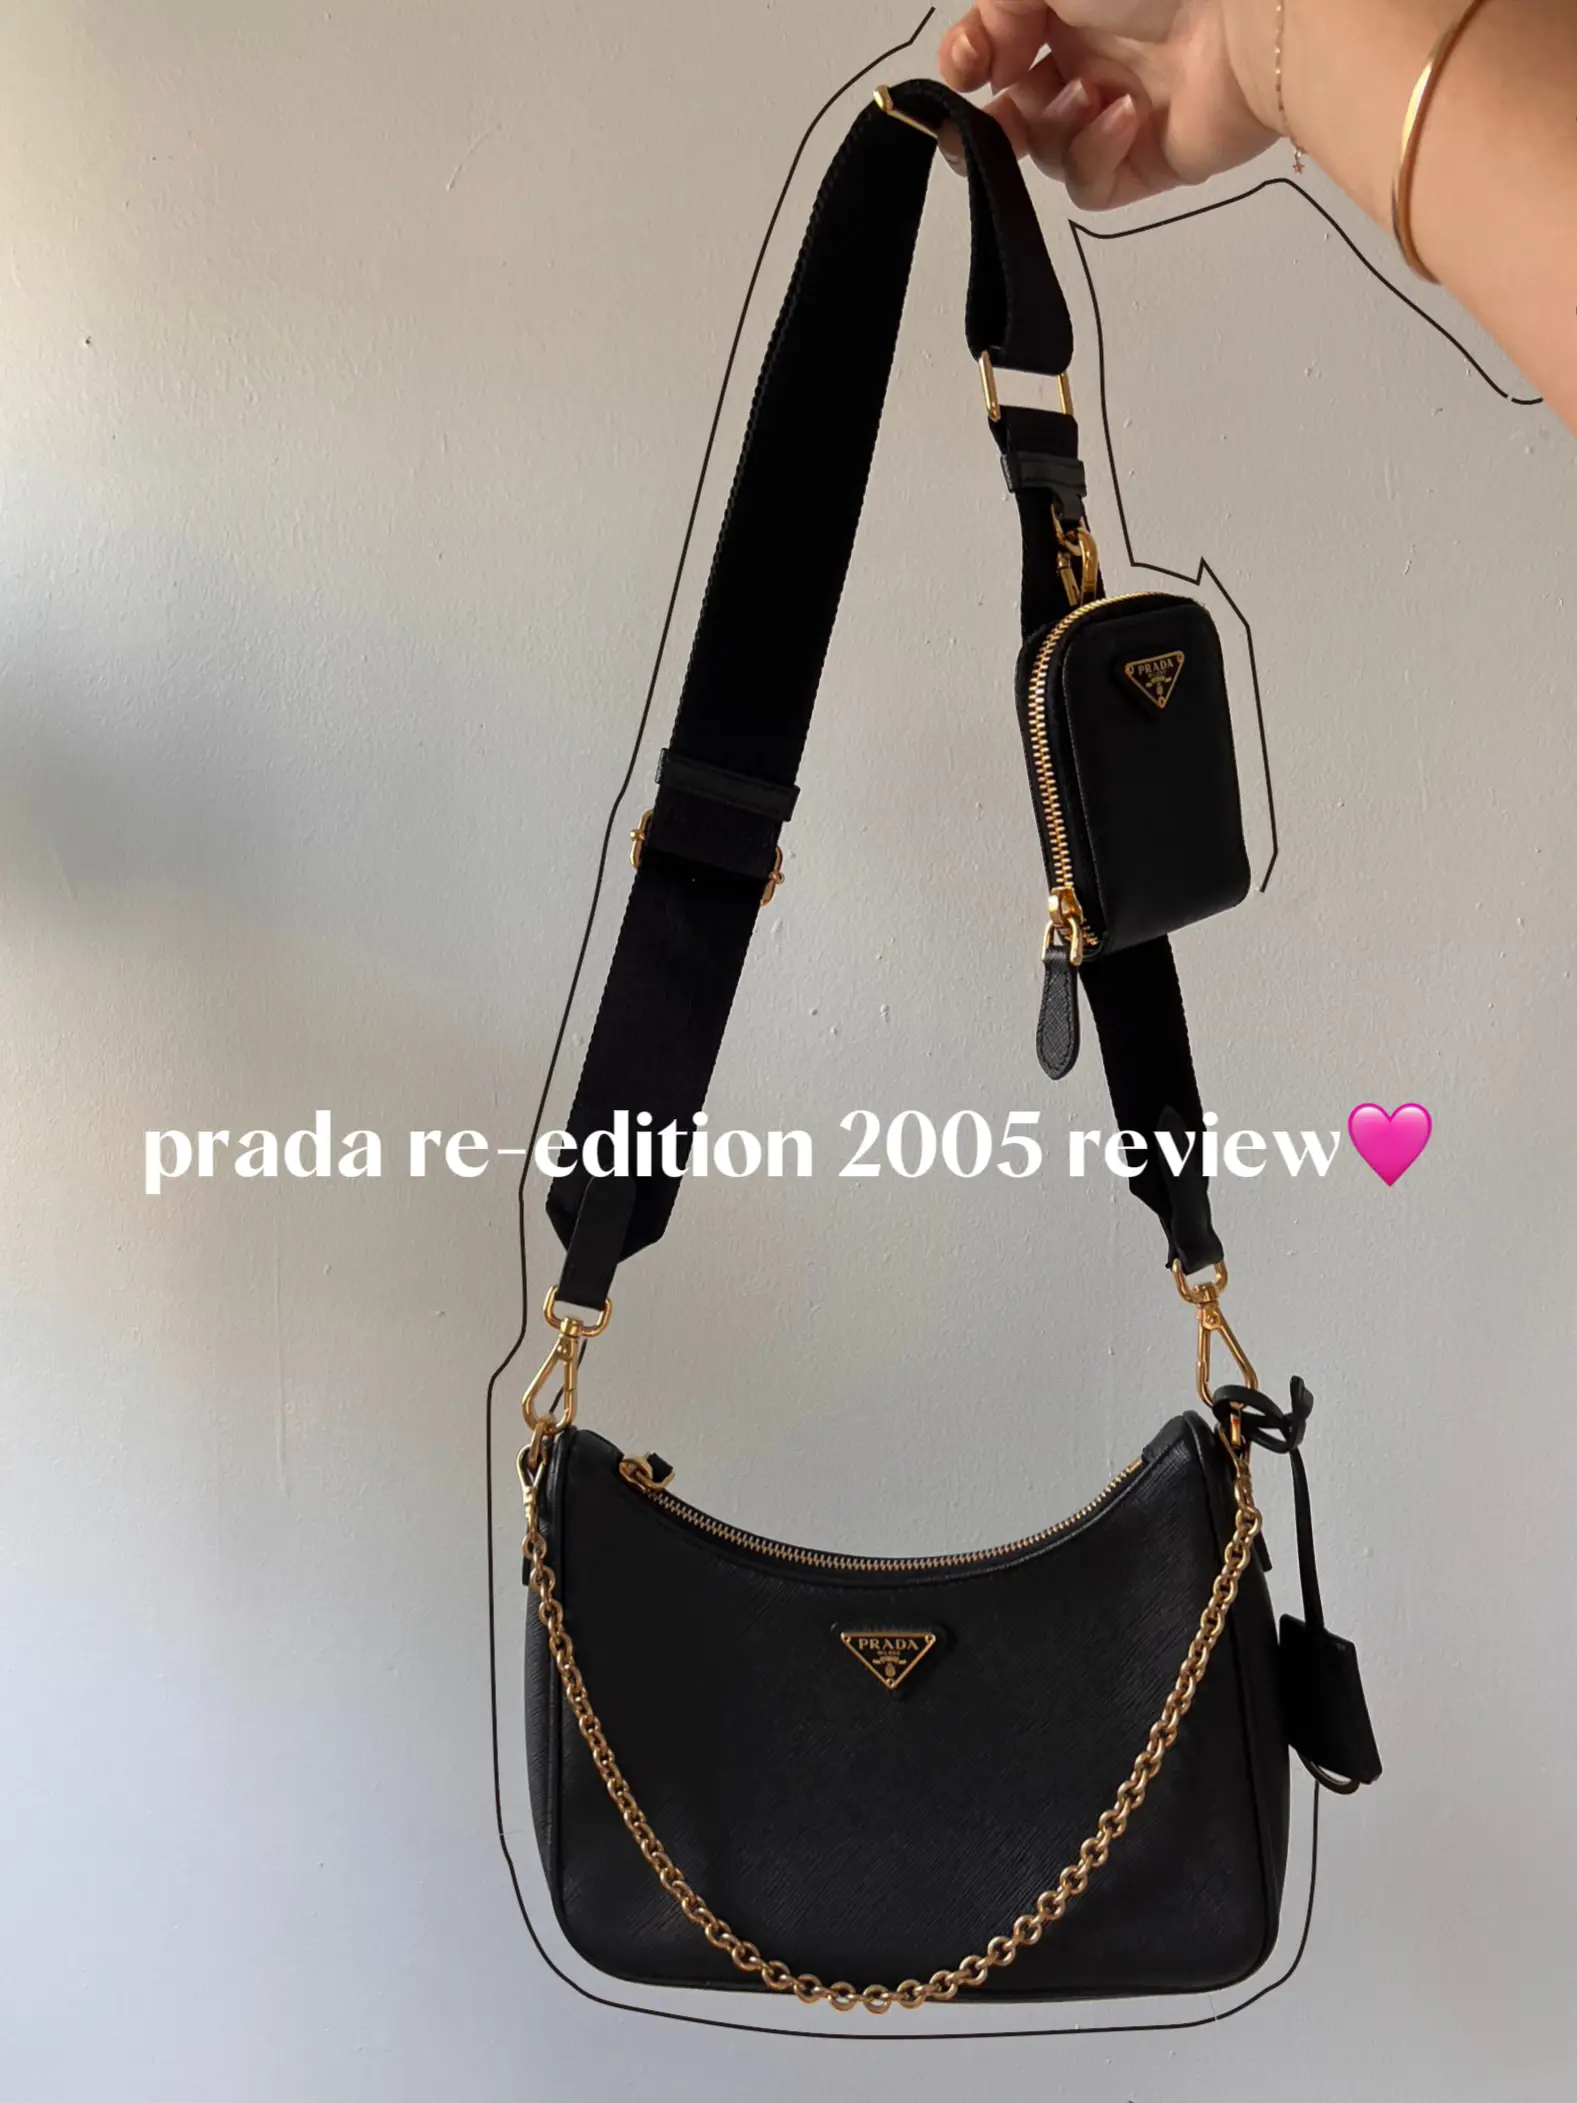 Prada Re-edition 2005 Saffiano Leather Bag-Reveal and Review 